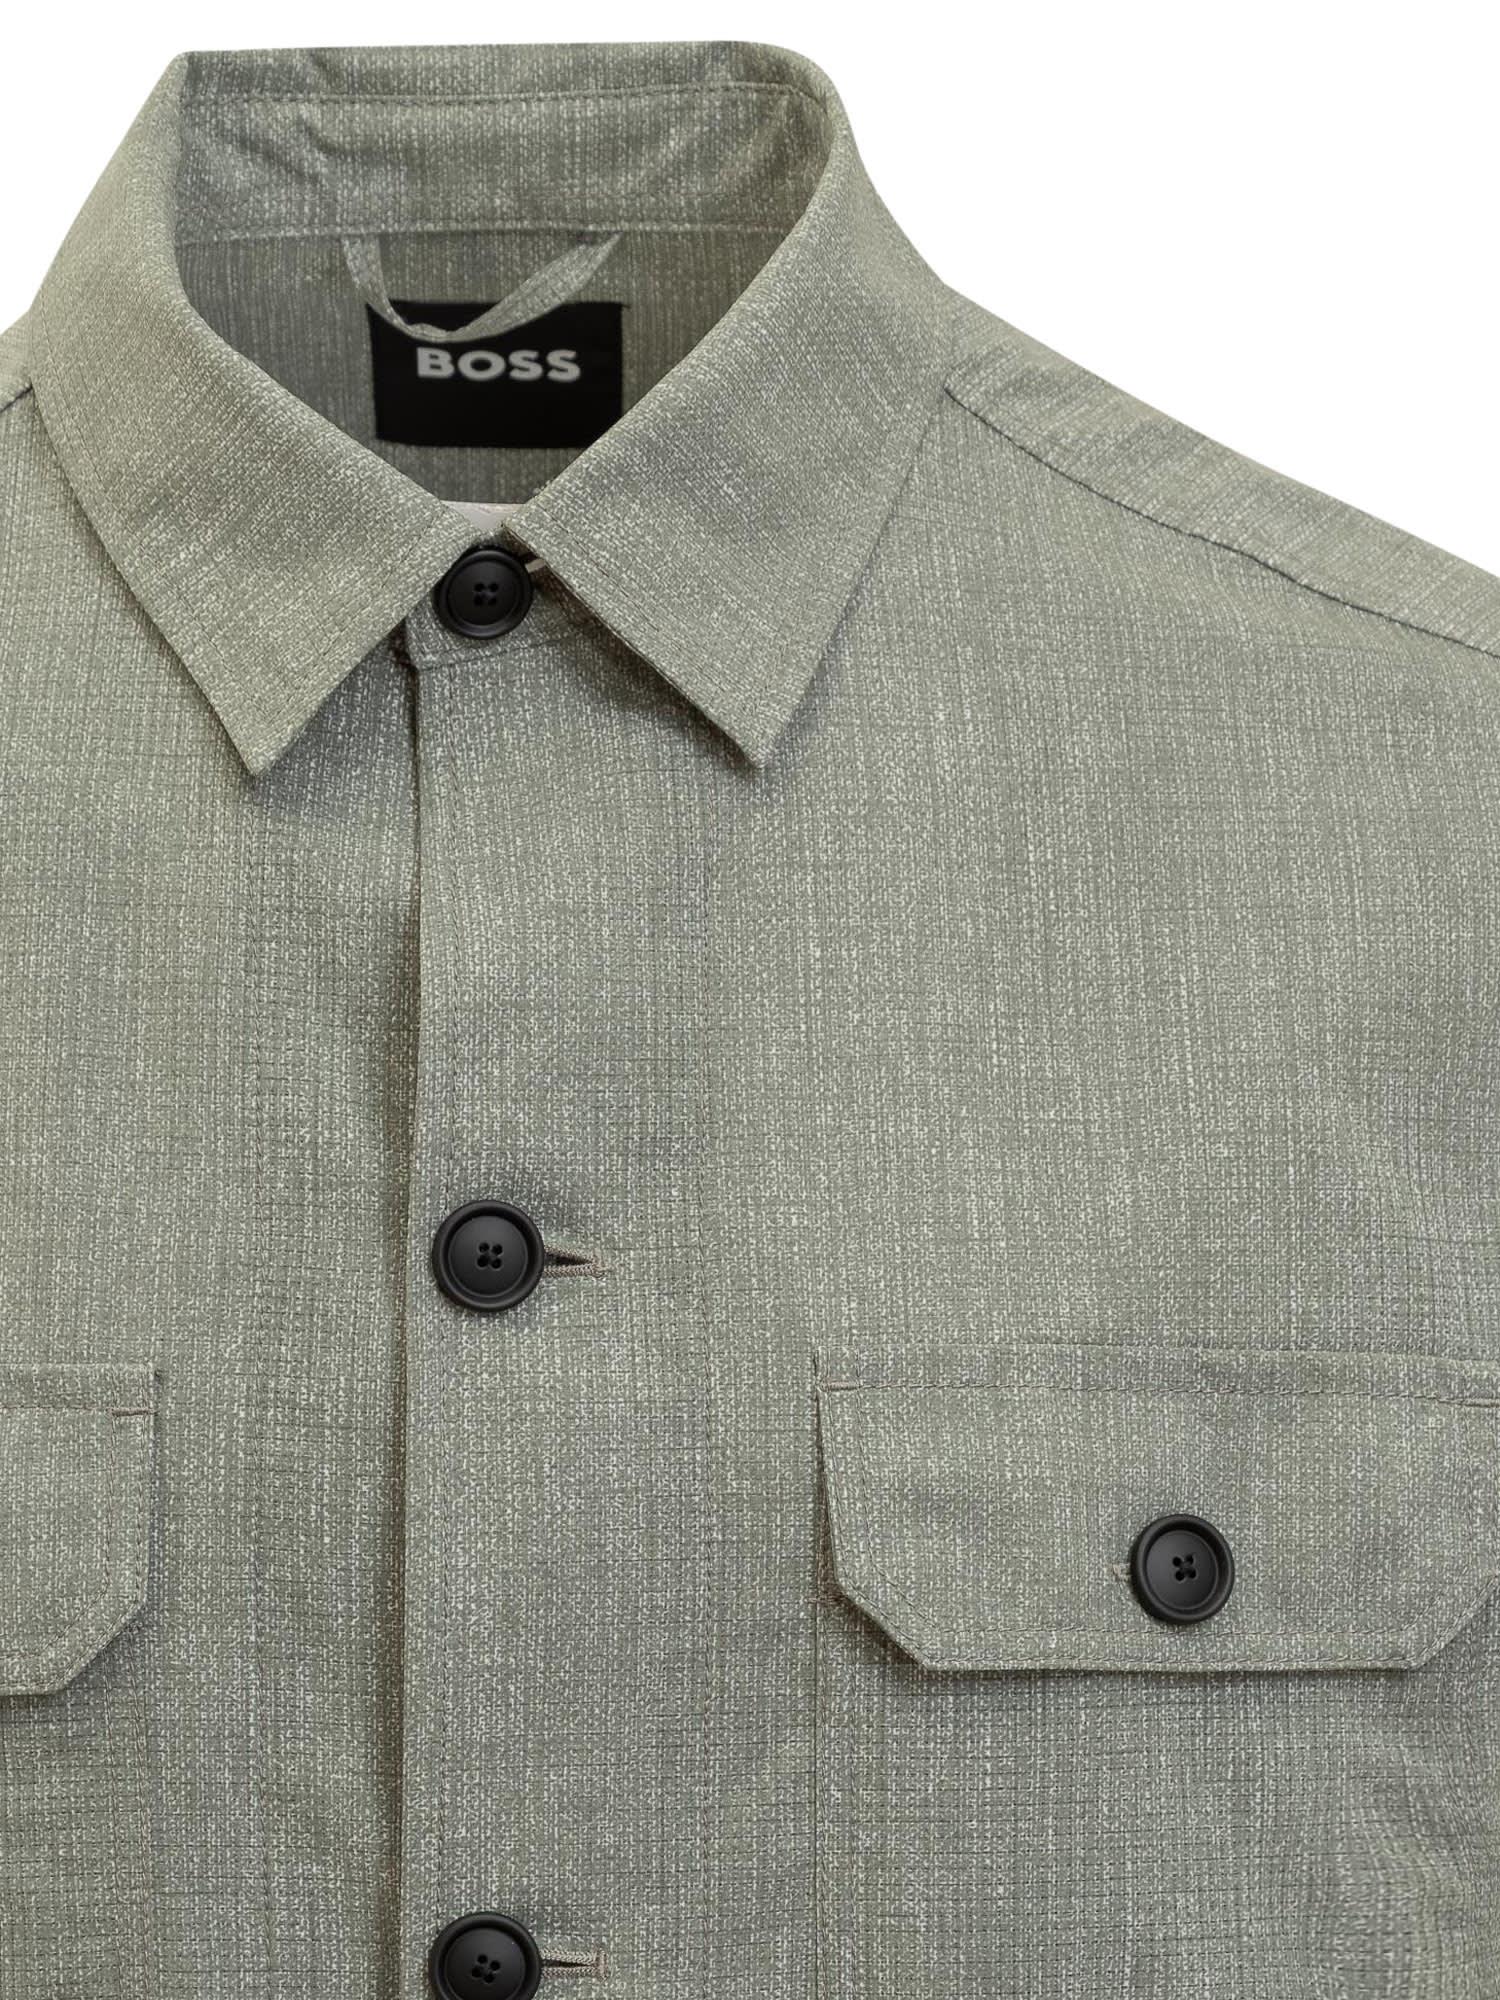 BOSS by HUGO BOSS Shirt Jacket in Gray for Men Lyst